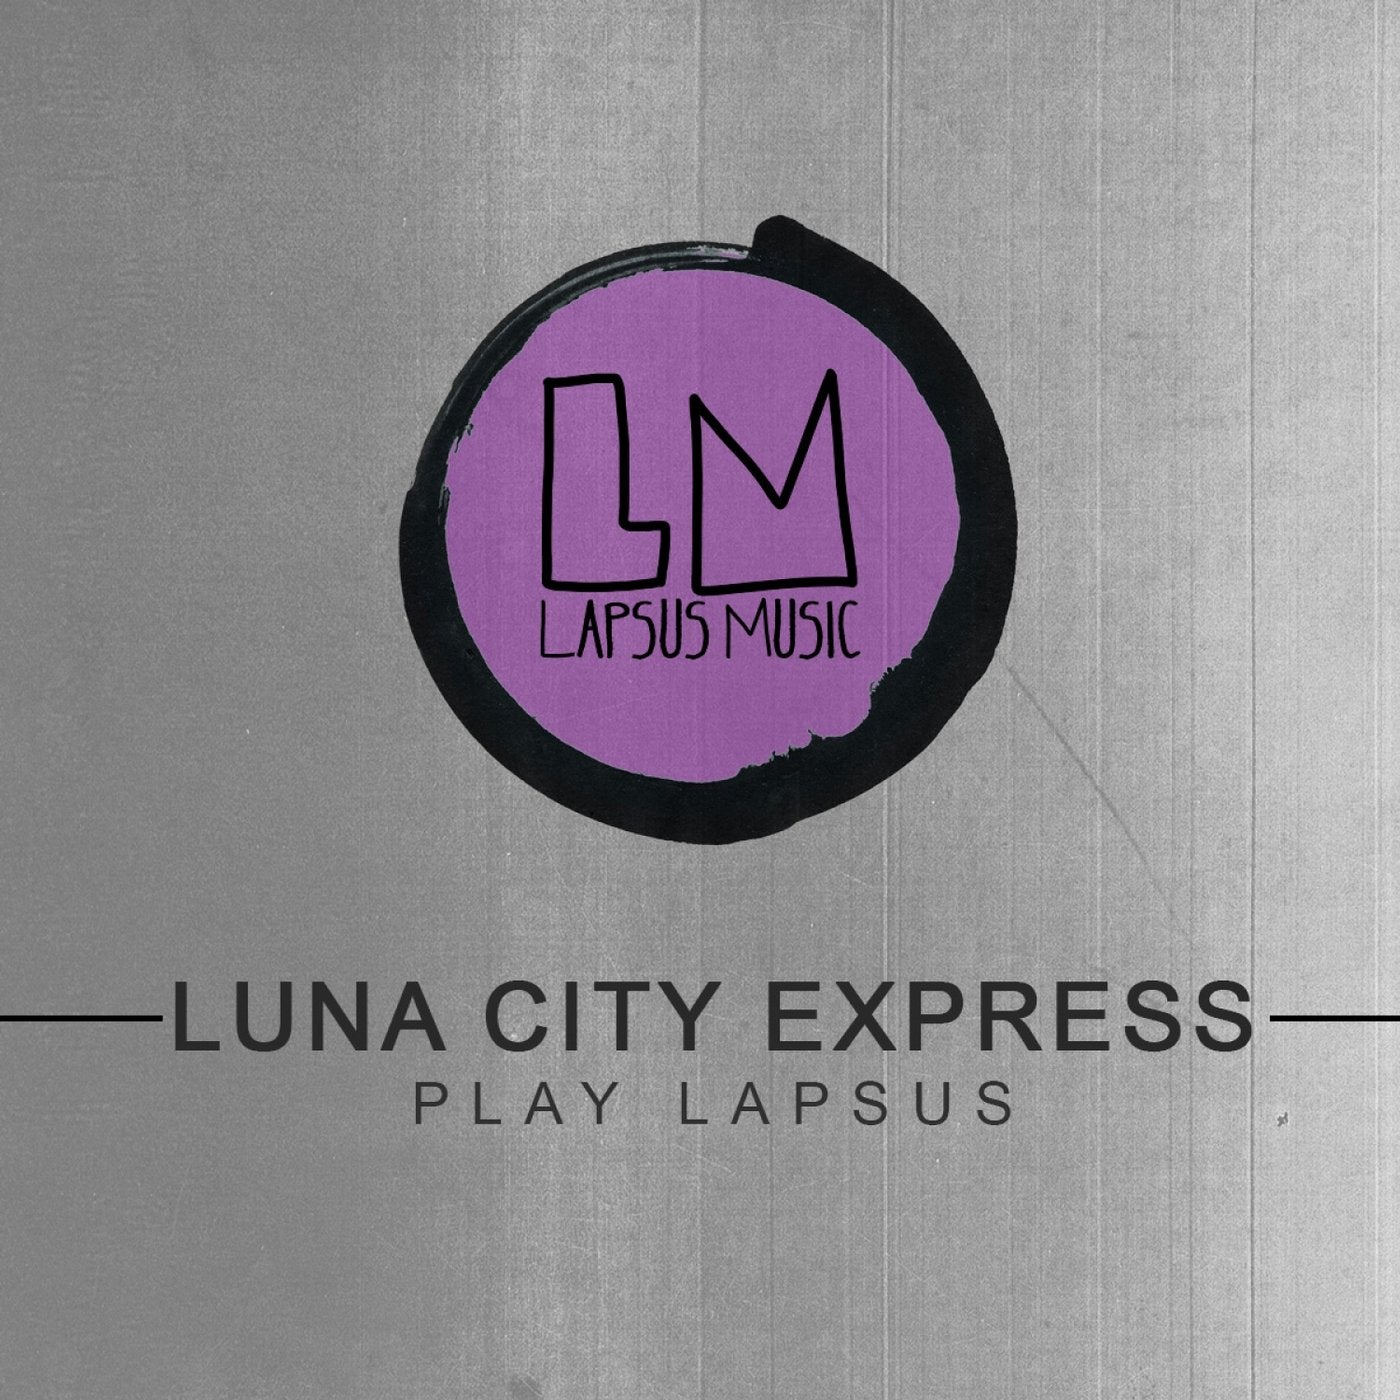 Luna City Express Play Lapsus